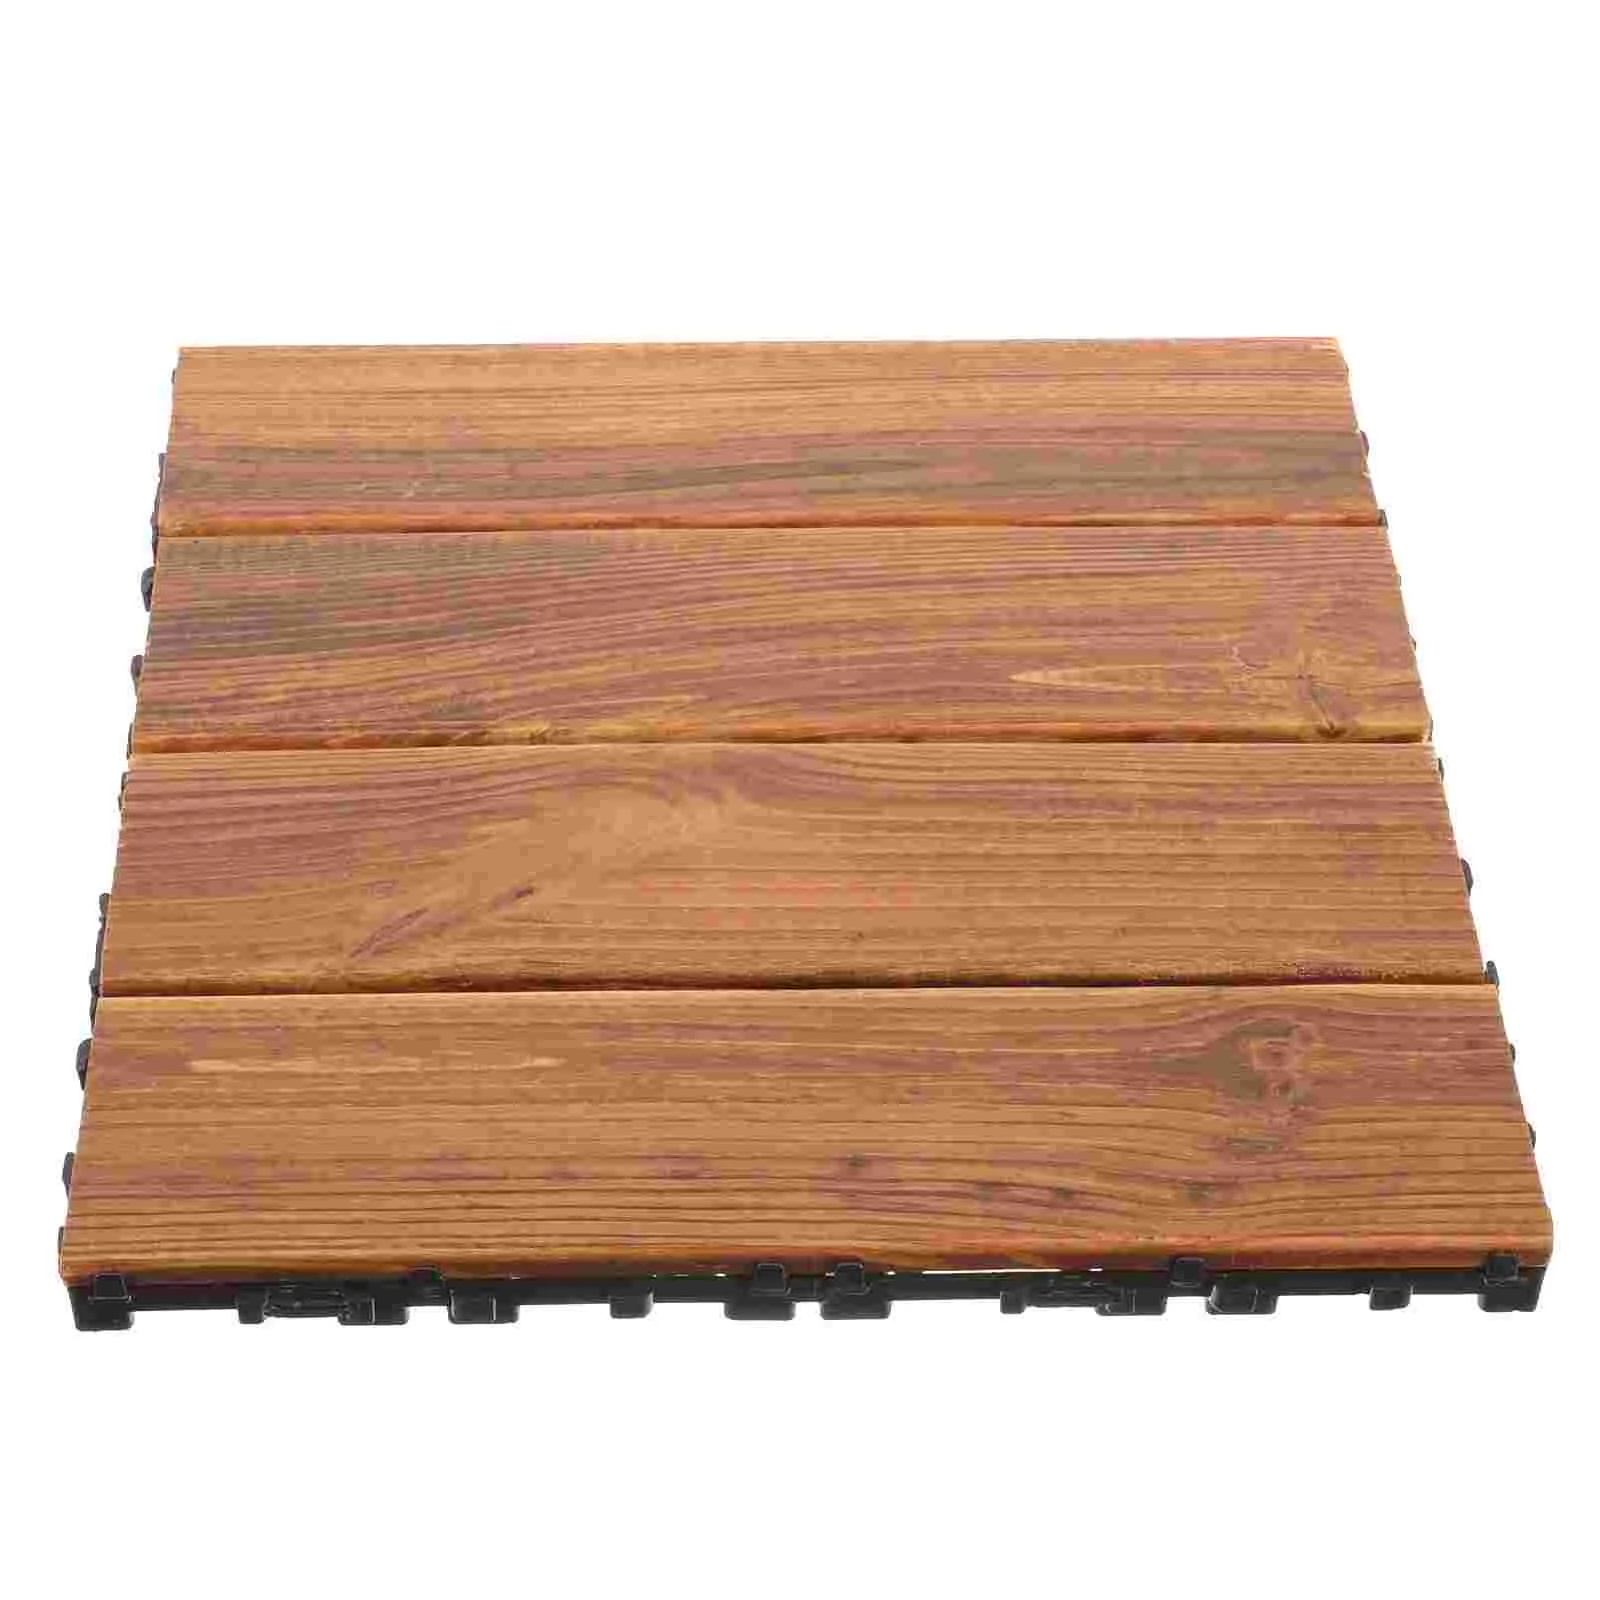 

Home Supplies Outdoor Wooden Rugs Interlocking Decking Tiles Floor Self-assemble Patio Flooring Balcony Decor